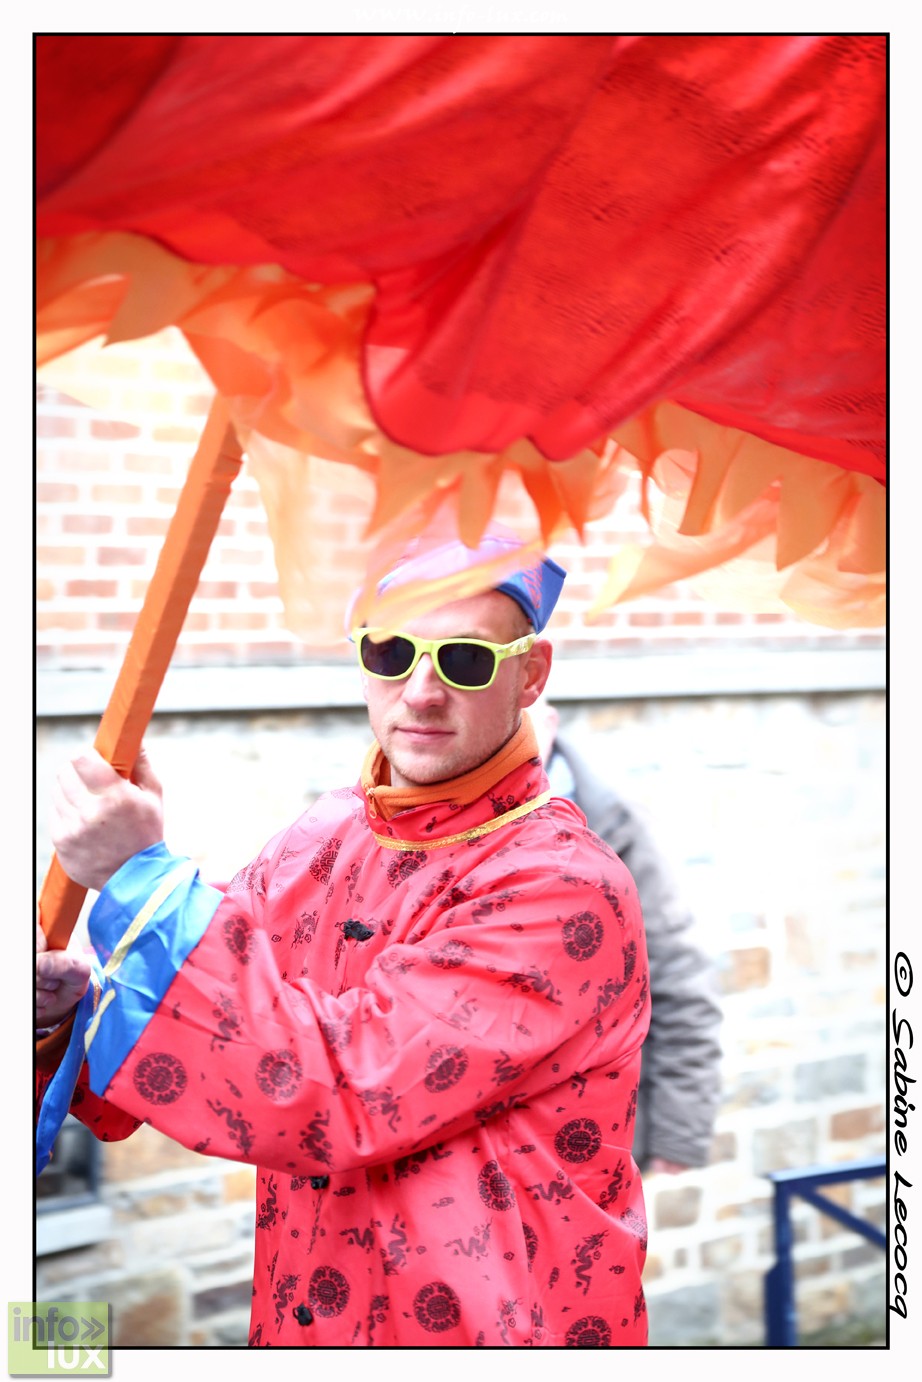 images/stories/PHOTOSREP/La-Roche-en-Ardenne/Carnaval2/Carnaval-larocheb056